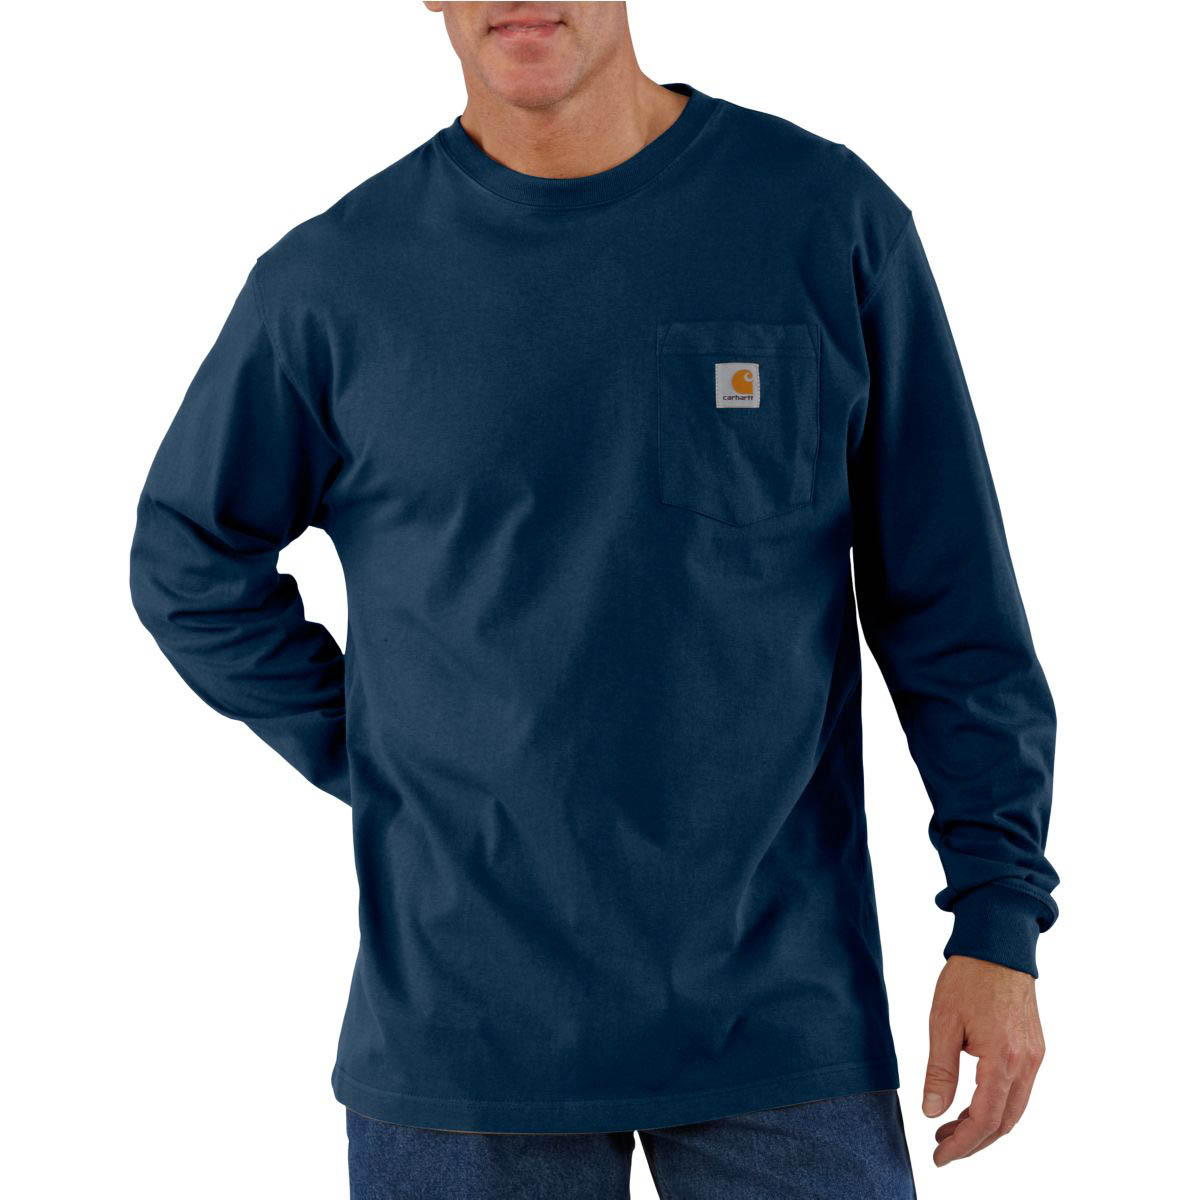 Carhartt Mens Force Heavyweight Thermal Base Layer Long Sleeve Pocket Shirt